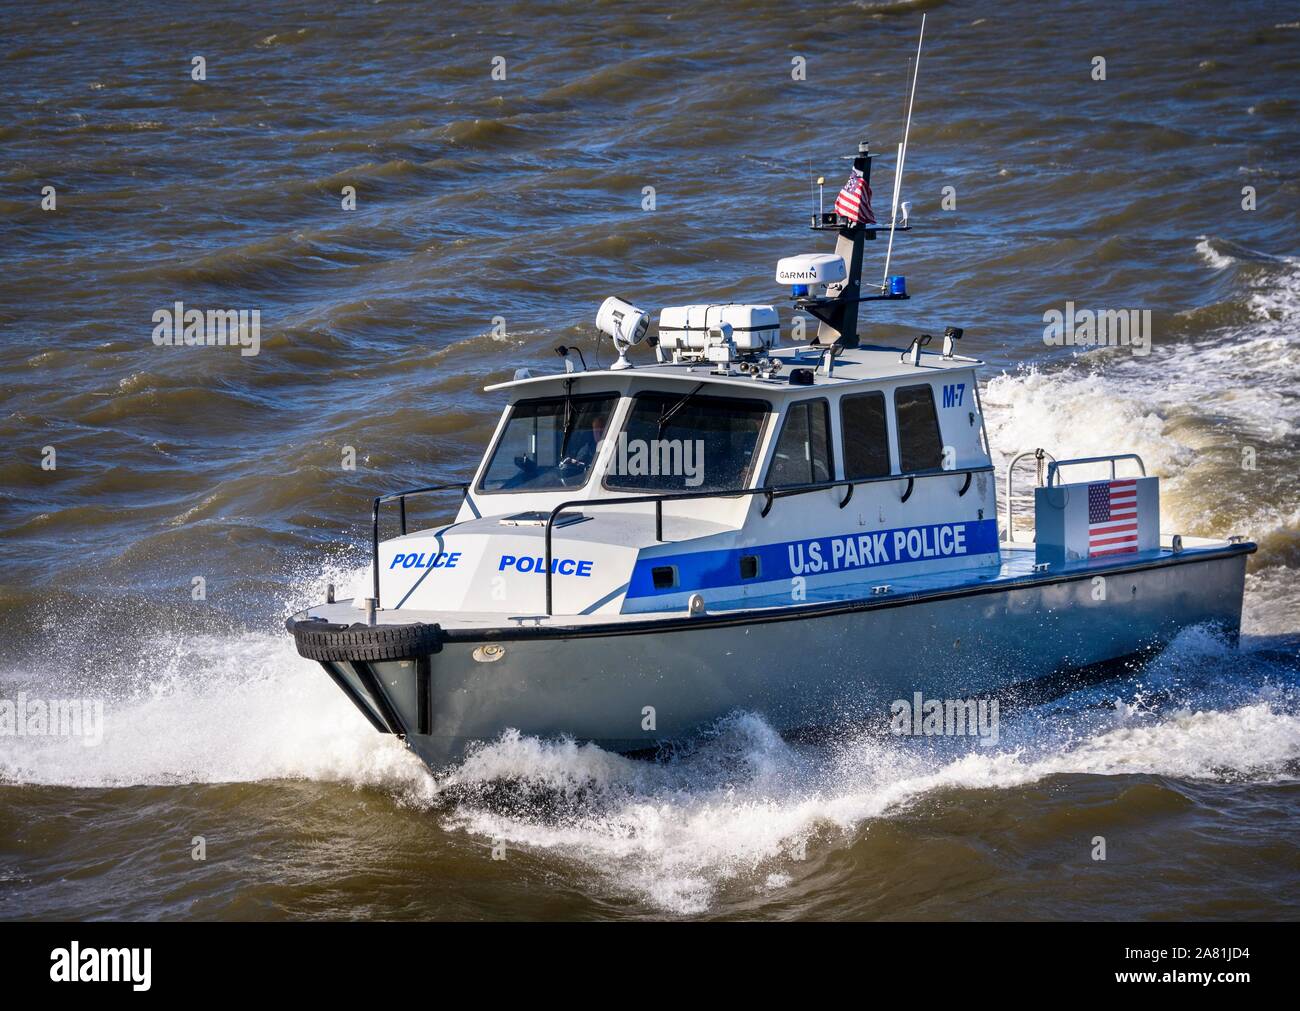 Police Boat on the Hudson River, Police, U.S. Park Police, New York City,  New York, USA Stock Photo - Alamy